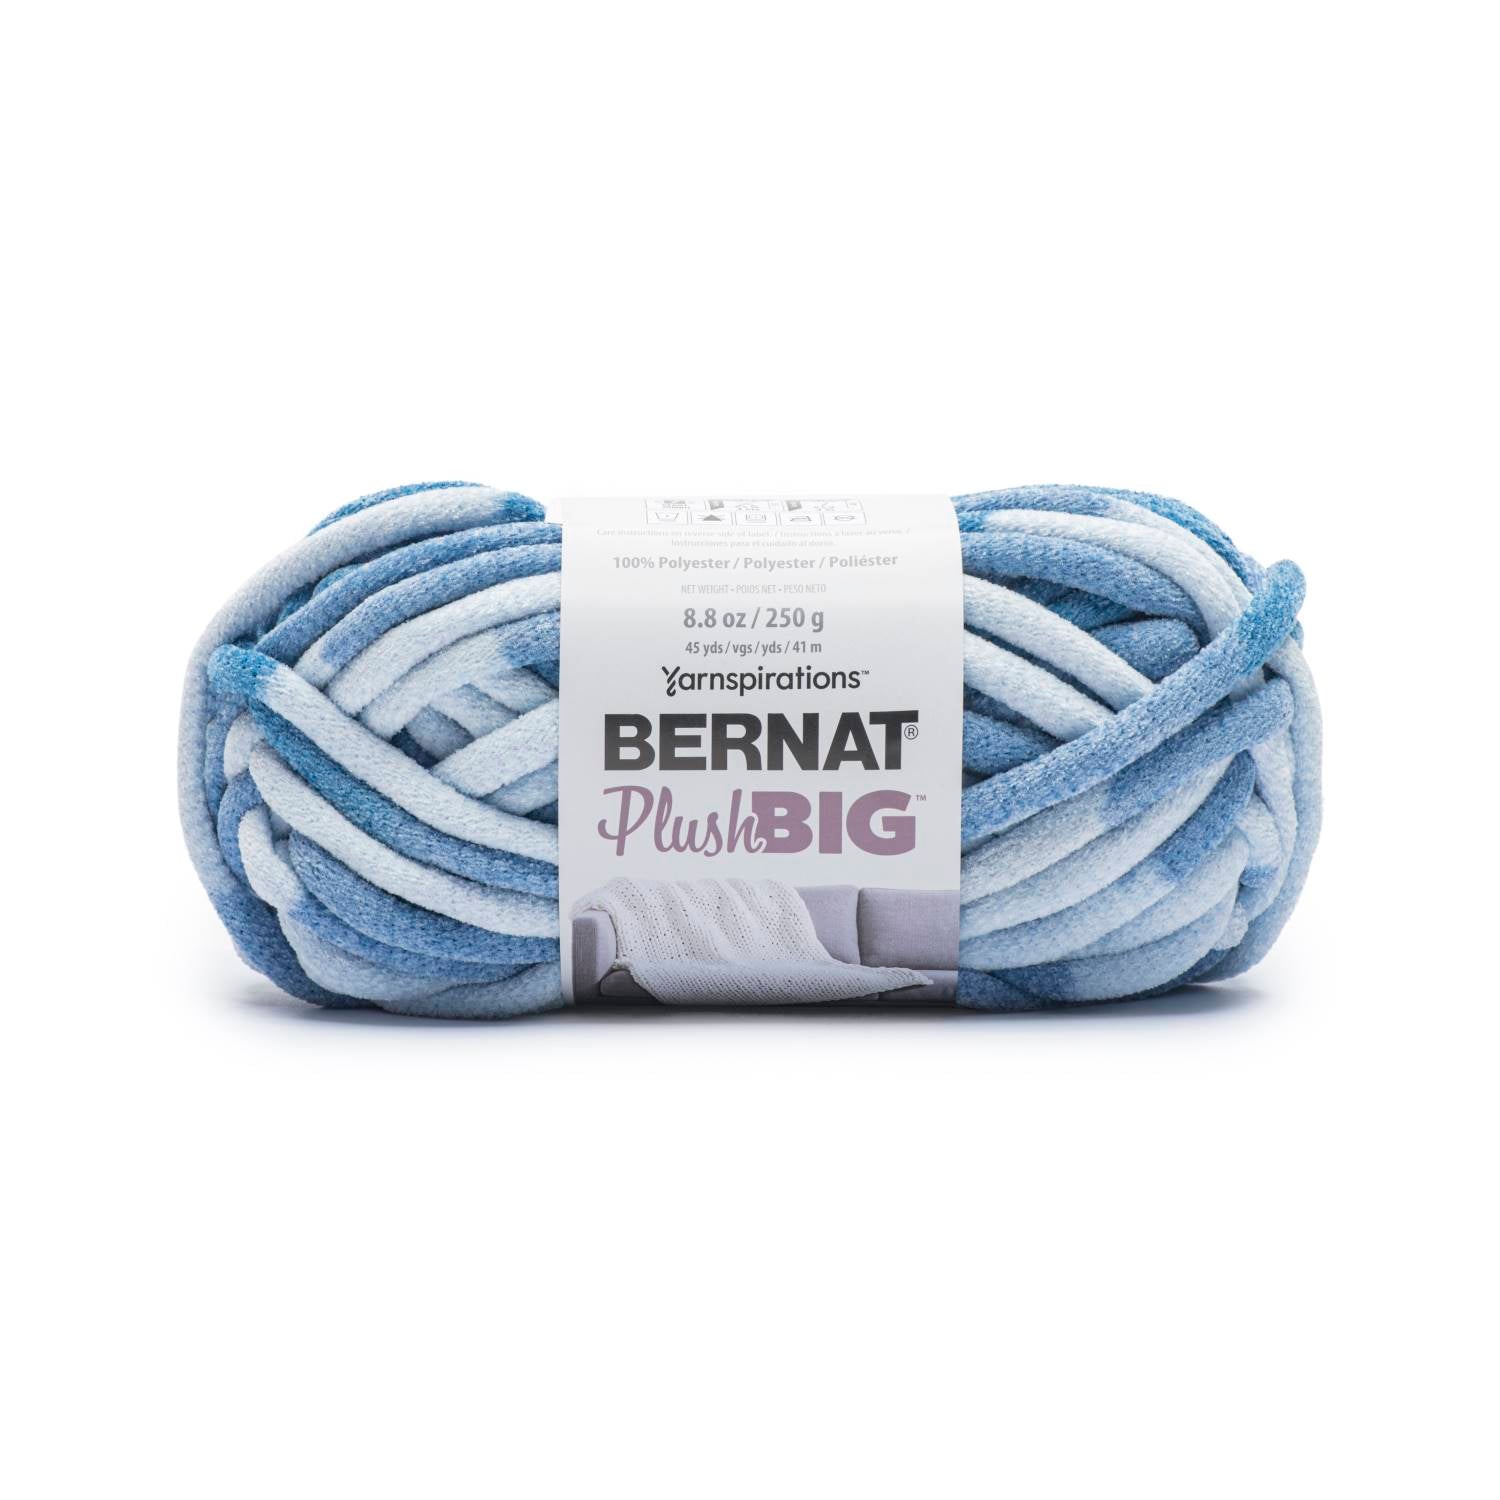 Bernat Blanket Extra Thick Clay Yarn - 1 Pack of 600g/21oz - Polyester - 7 Jumbo - Knitting, Crocheting, Crafts & Amigurumi, Chunky Chenille Yarn